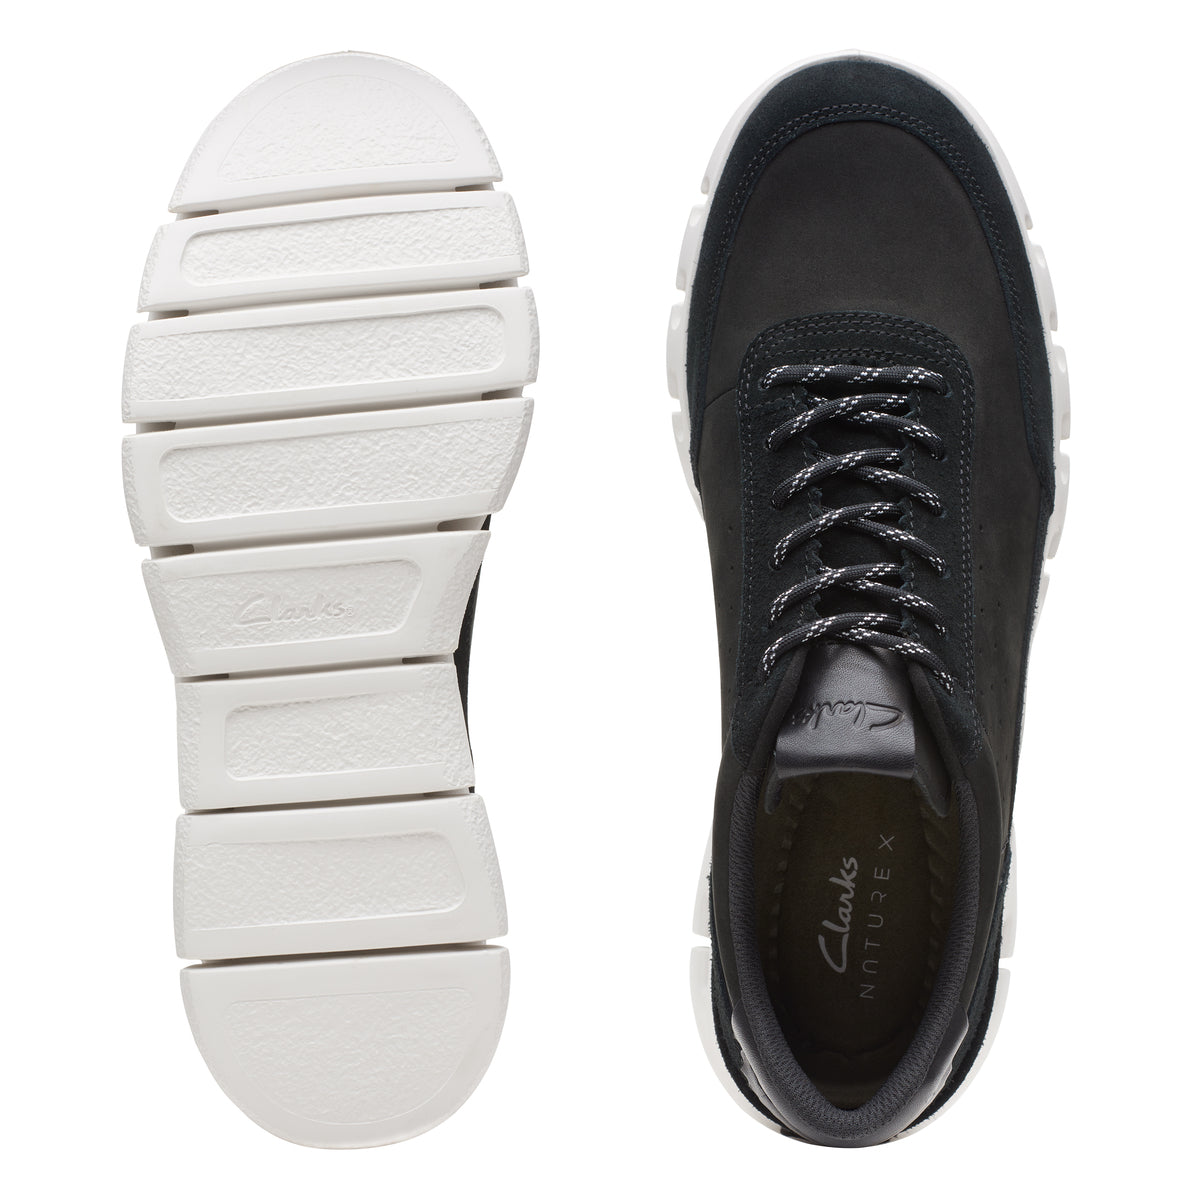 Sneakers De La Marca Clarks Para Hombre Modelo Nature X One Black Combi En Color Negro